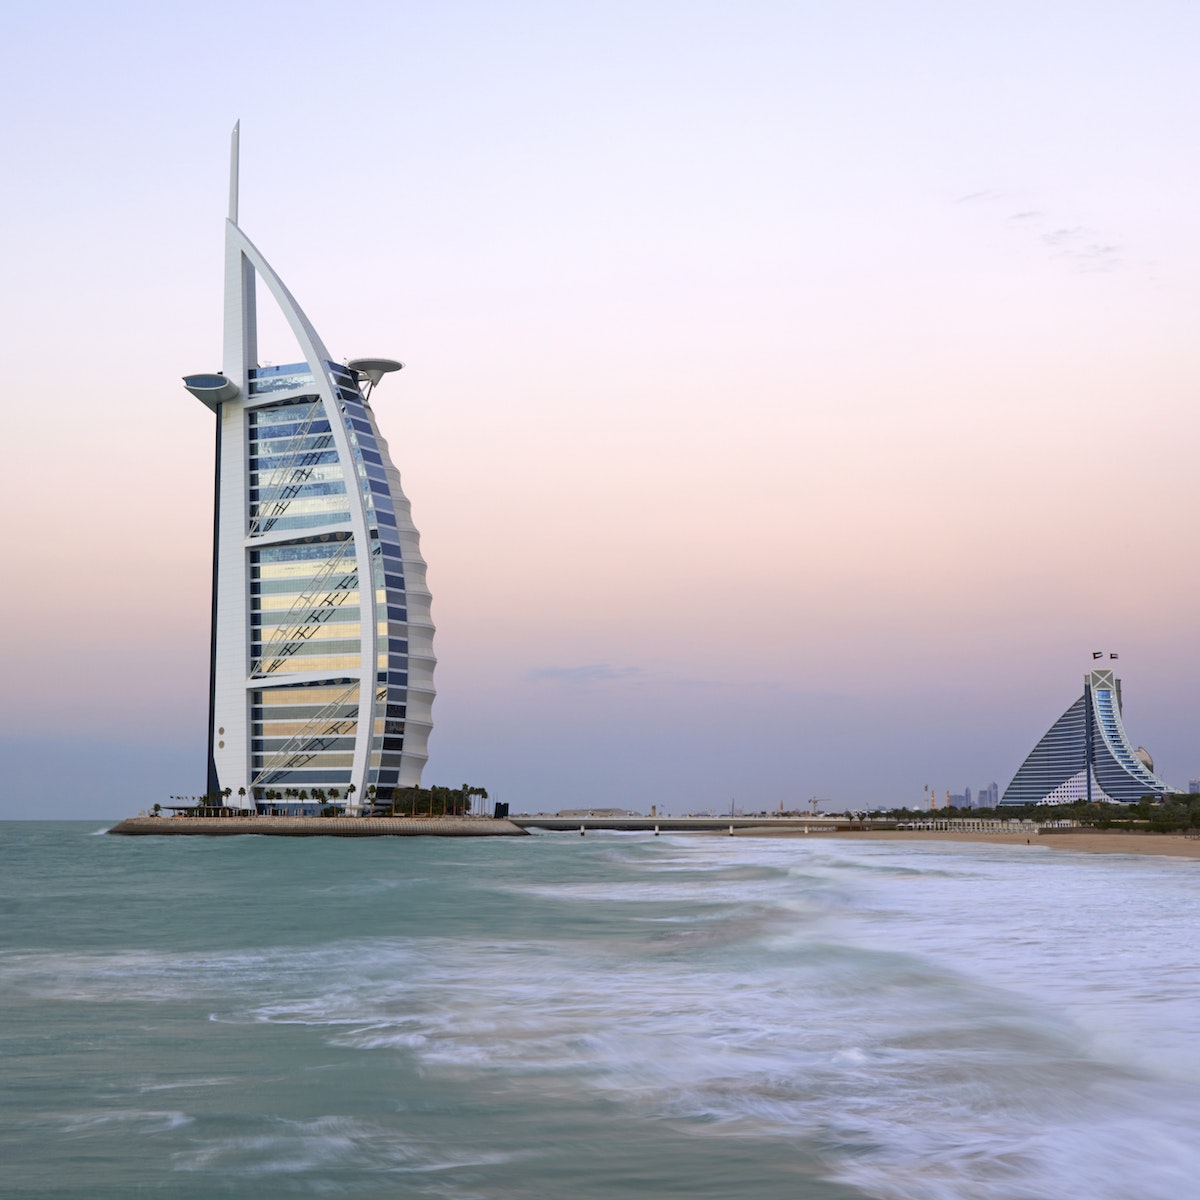 United Arab Emirates, Dubai, Jumeira beach, Hotel Mina A'Salam Madinat Jumeirah with View of Burj Al Arab hotel